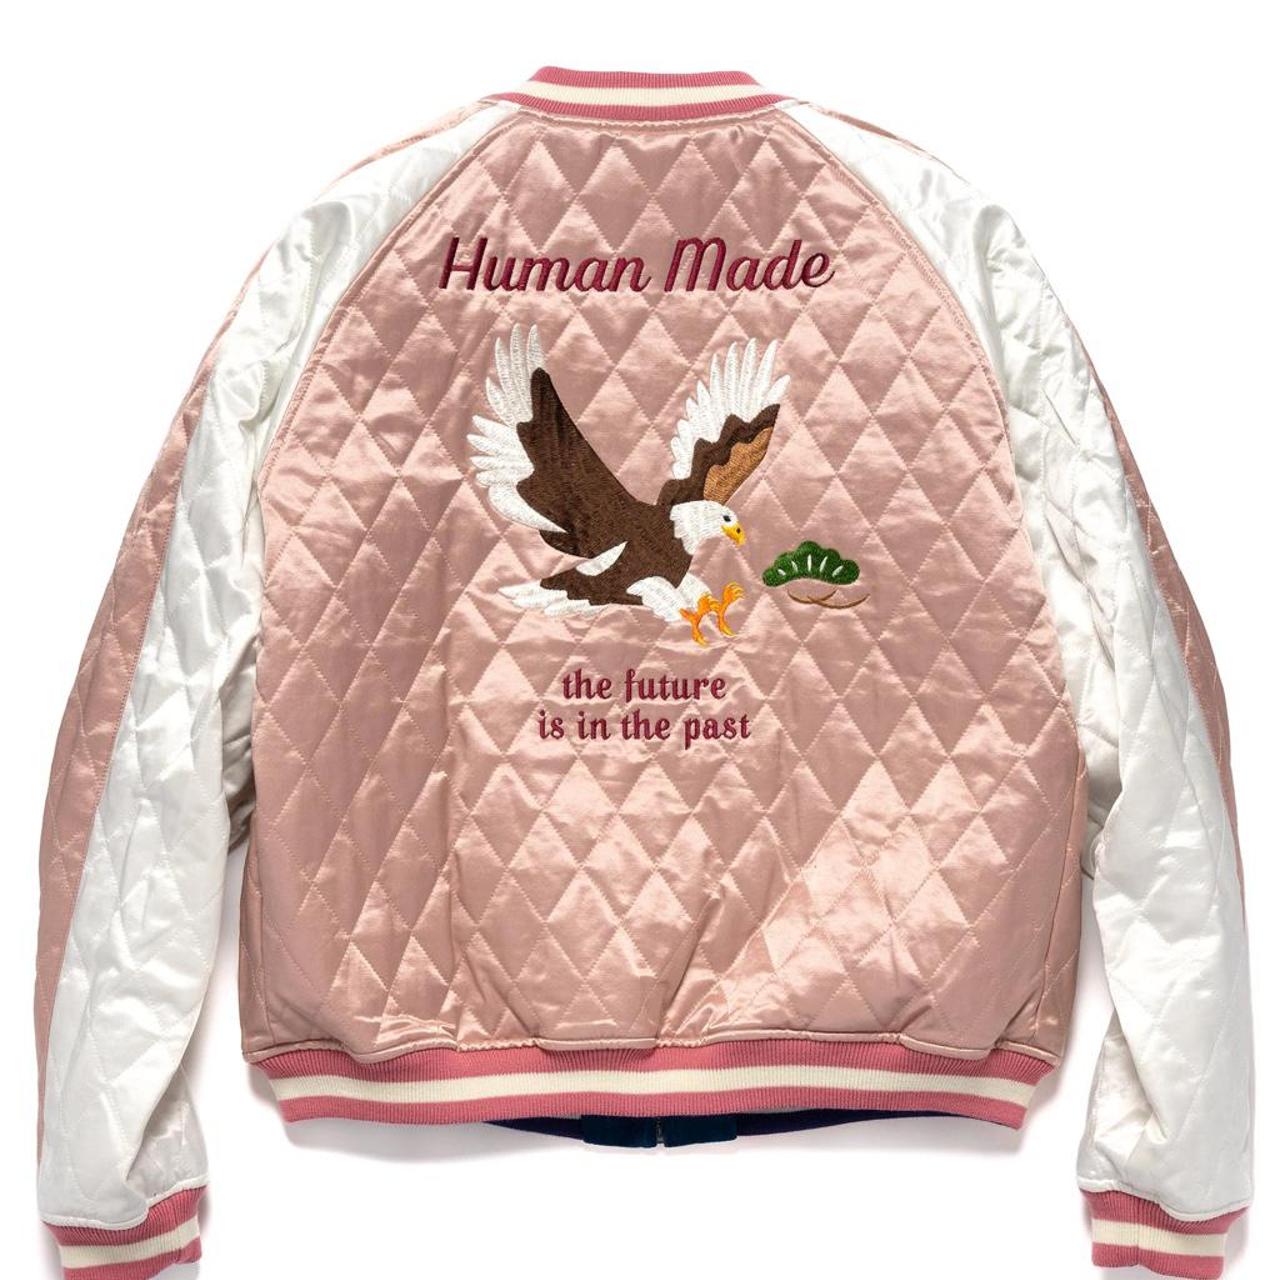 Human made Yokosuka jacket